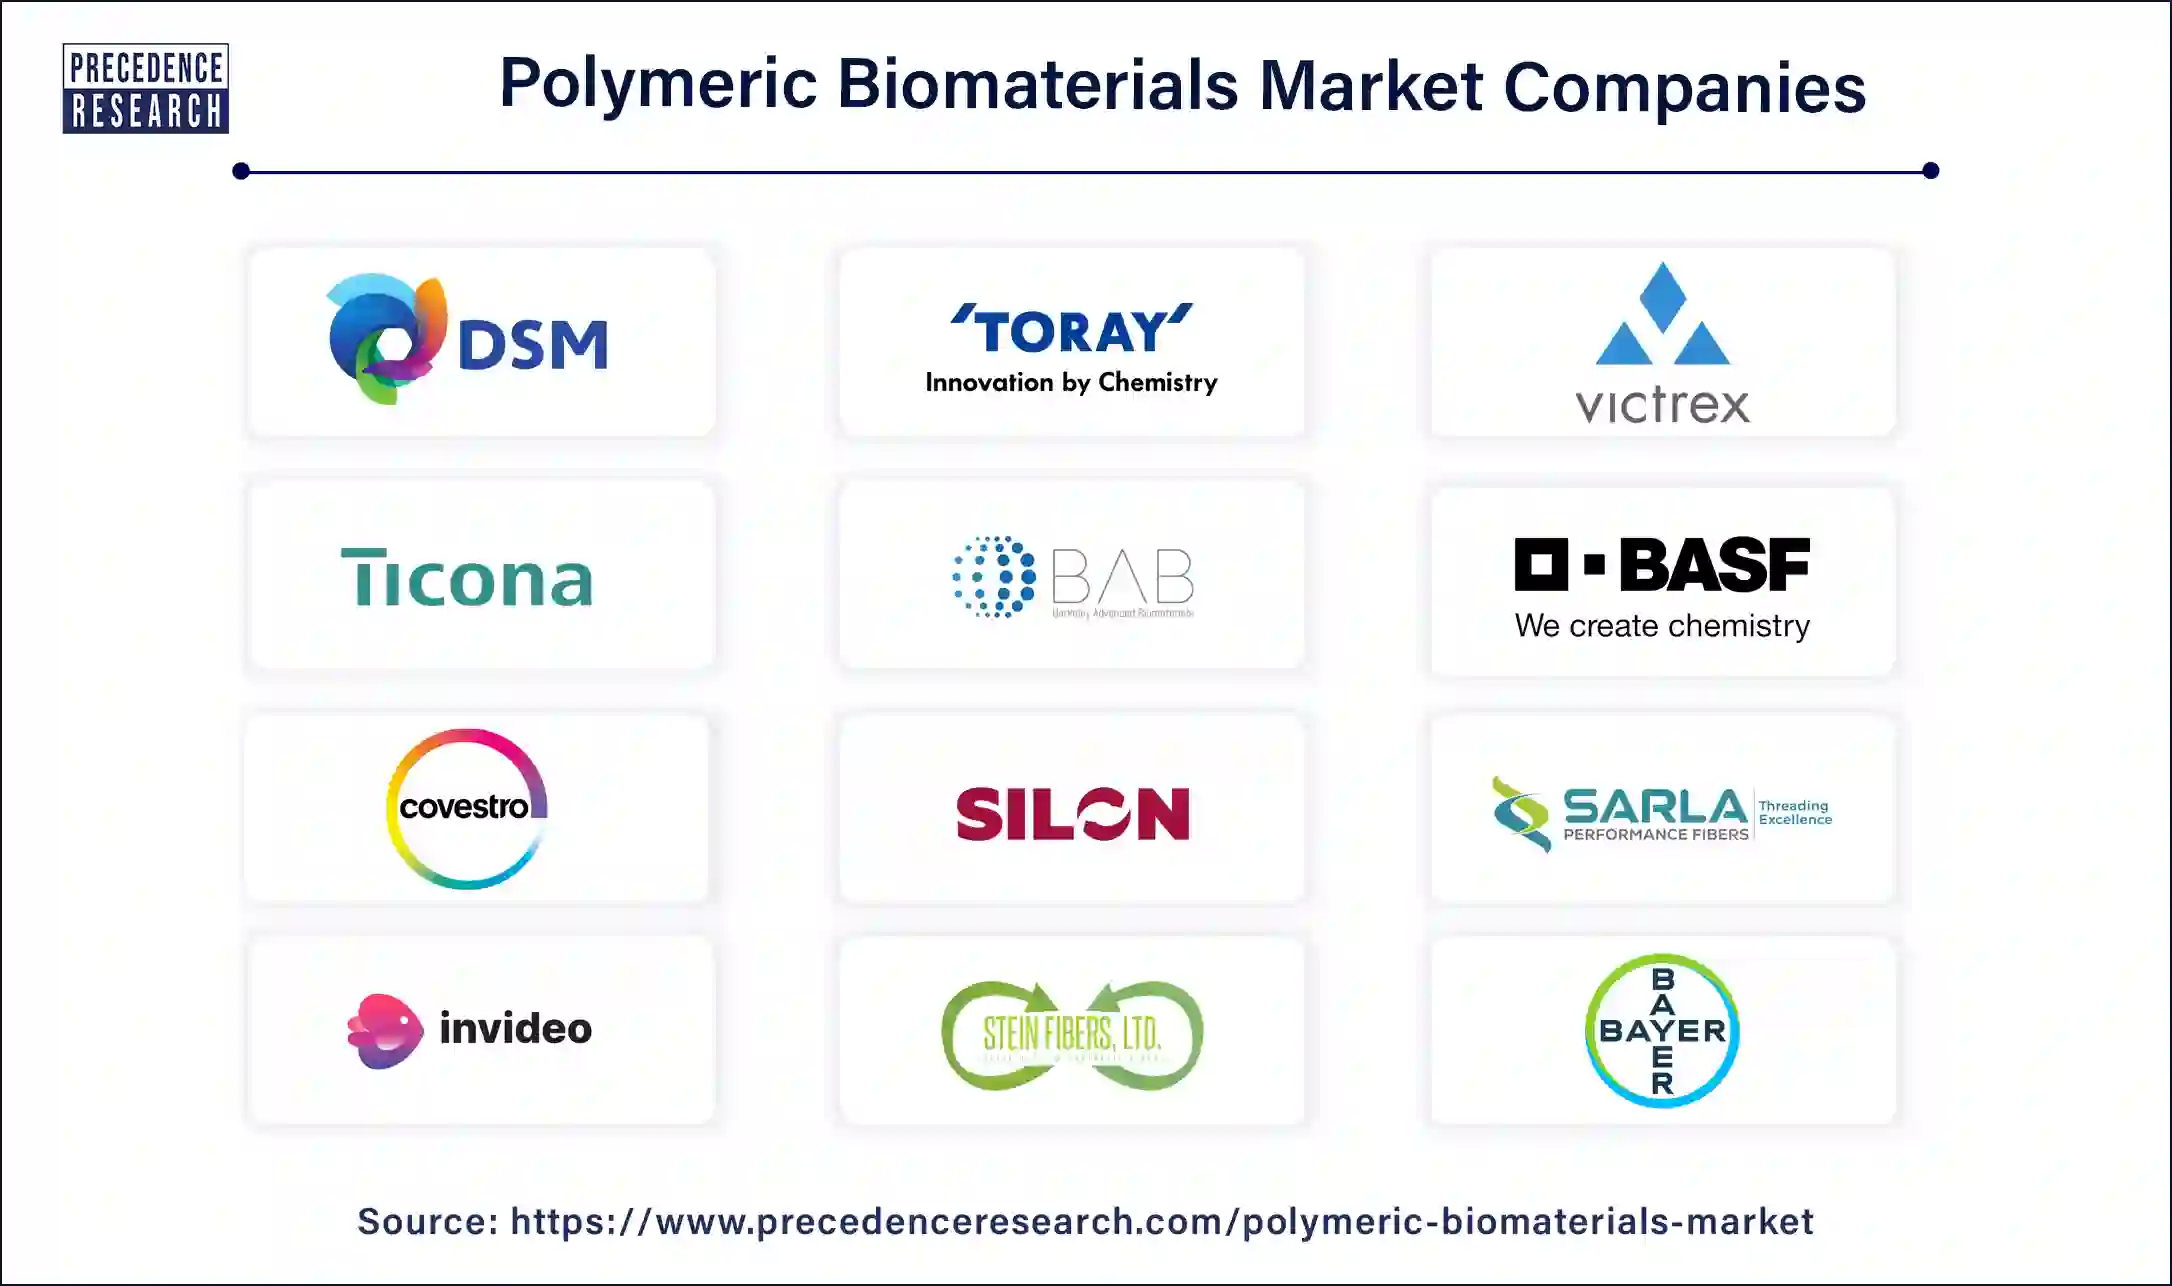 Polymeric Biomaterials Companies